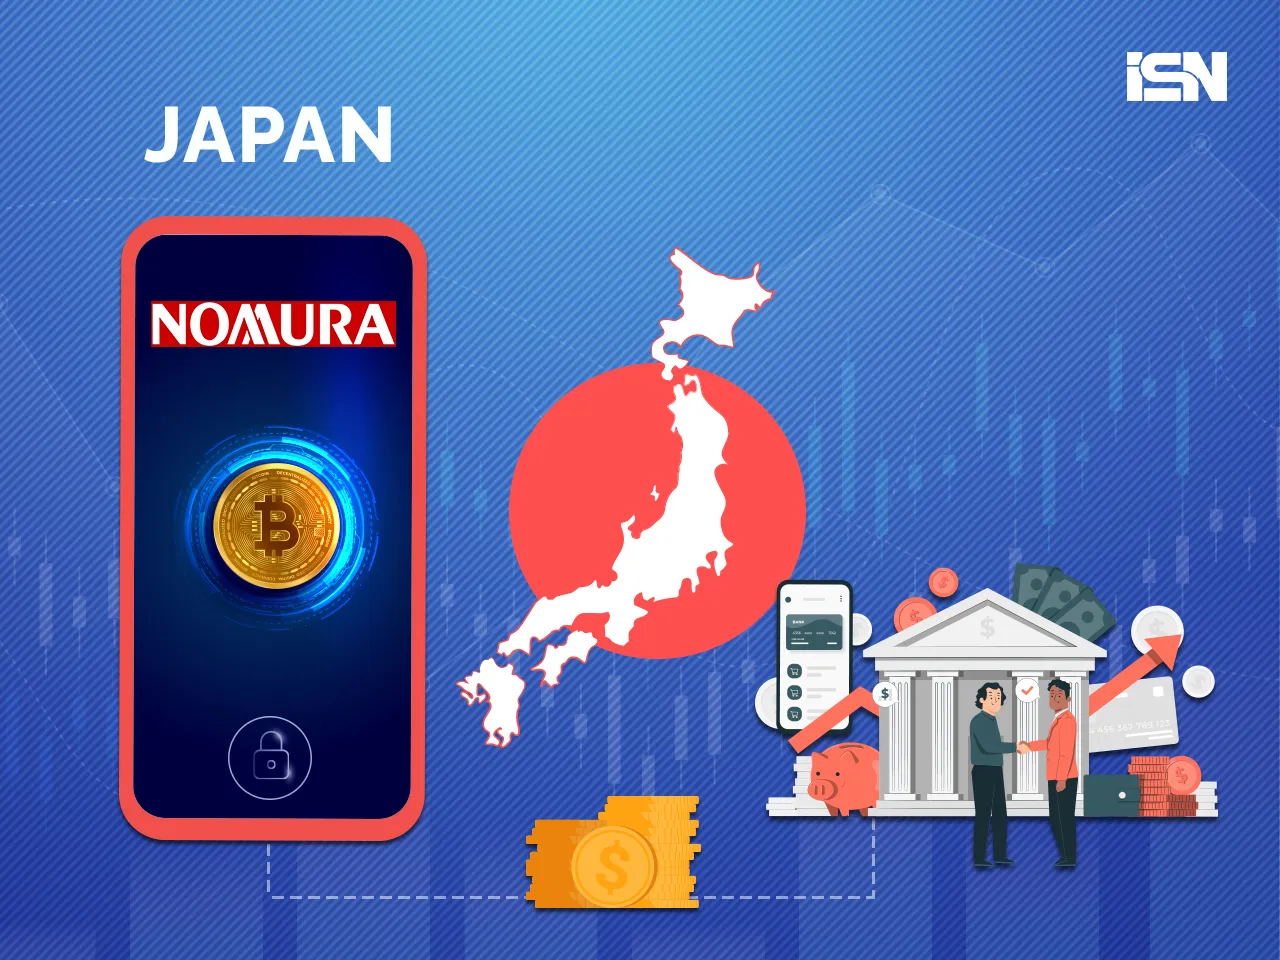 Japan's NOMURA launches Bitcoin fund for institutional investors 2.jpg